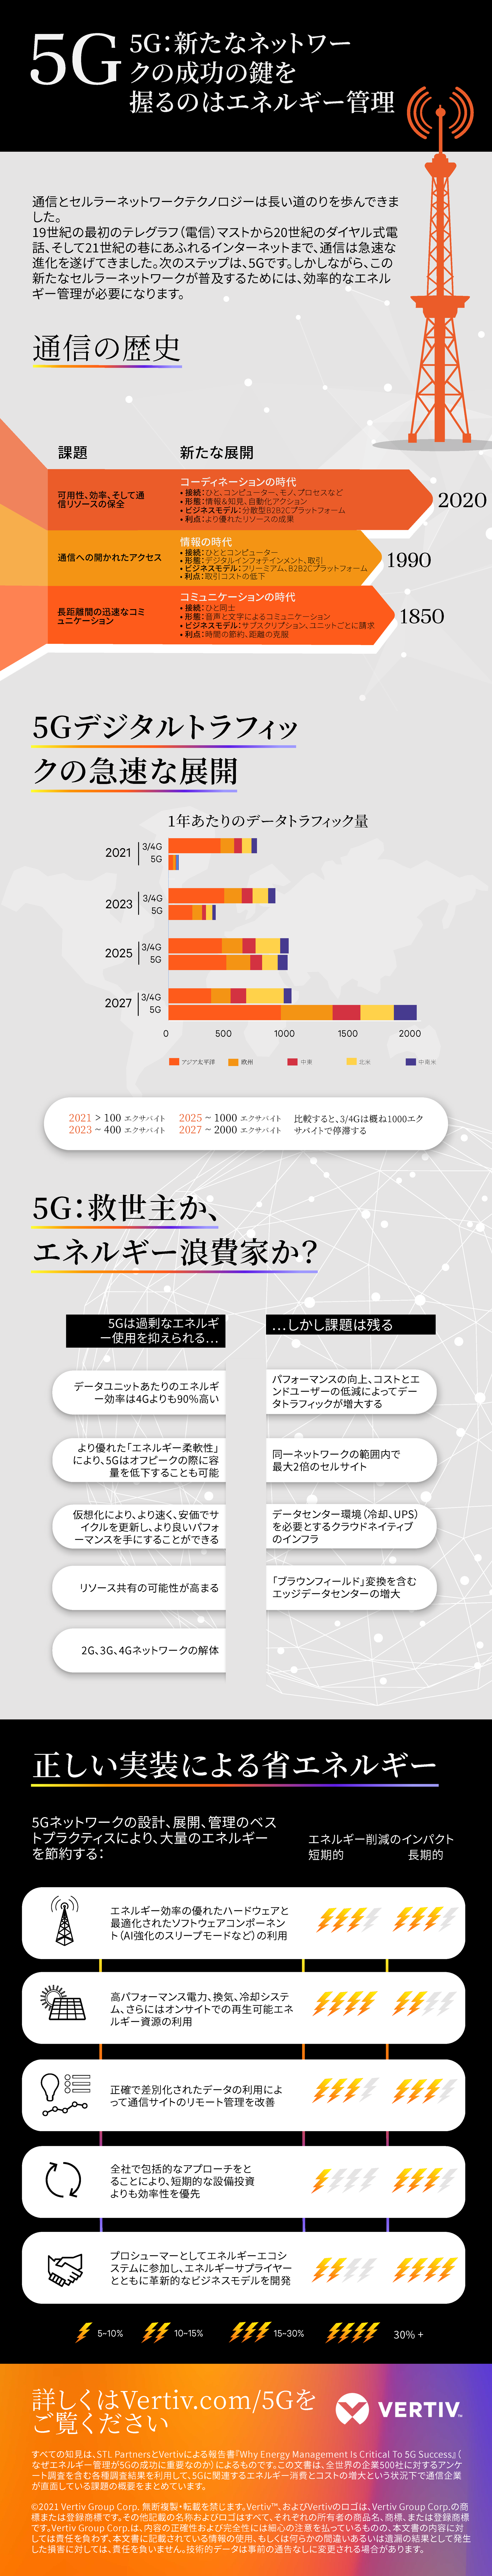 Vertiv 5G Infographic_US-IN-NA